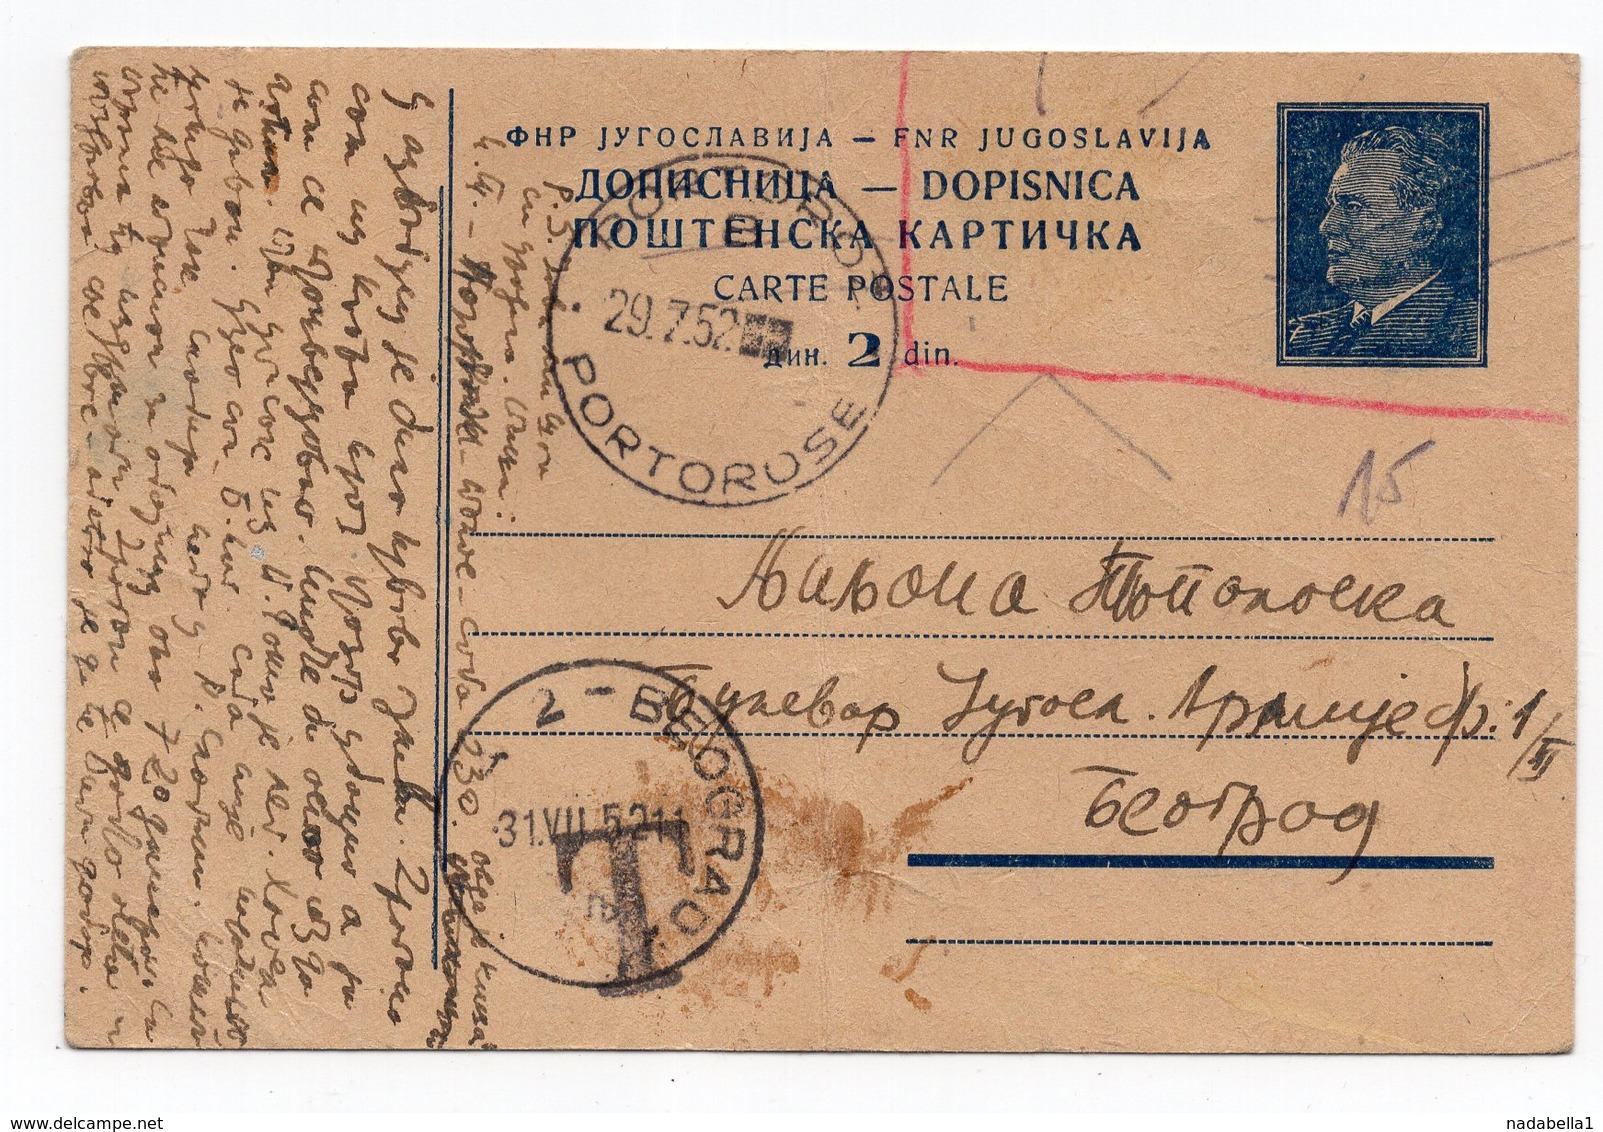 1952 YUGOSLAVIA, SLOVENIA, VUJA, PORTOROSE, TITO, STATIONARY CARD, 2 DIN, USED FROM PORTOROZ TO BELGRADE - Covers & Documents